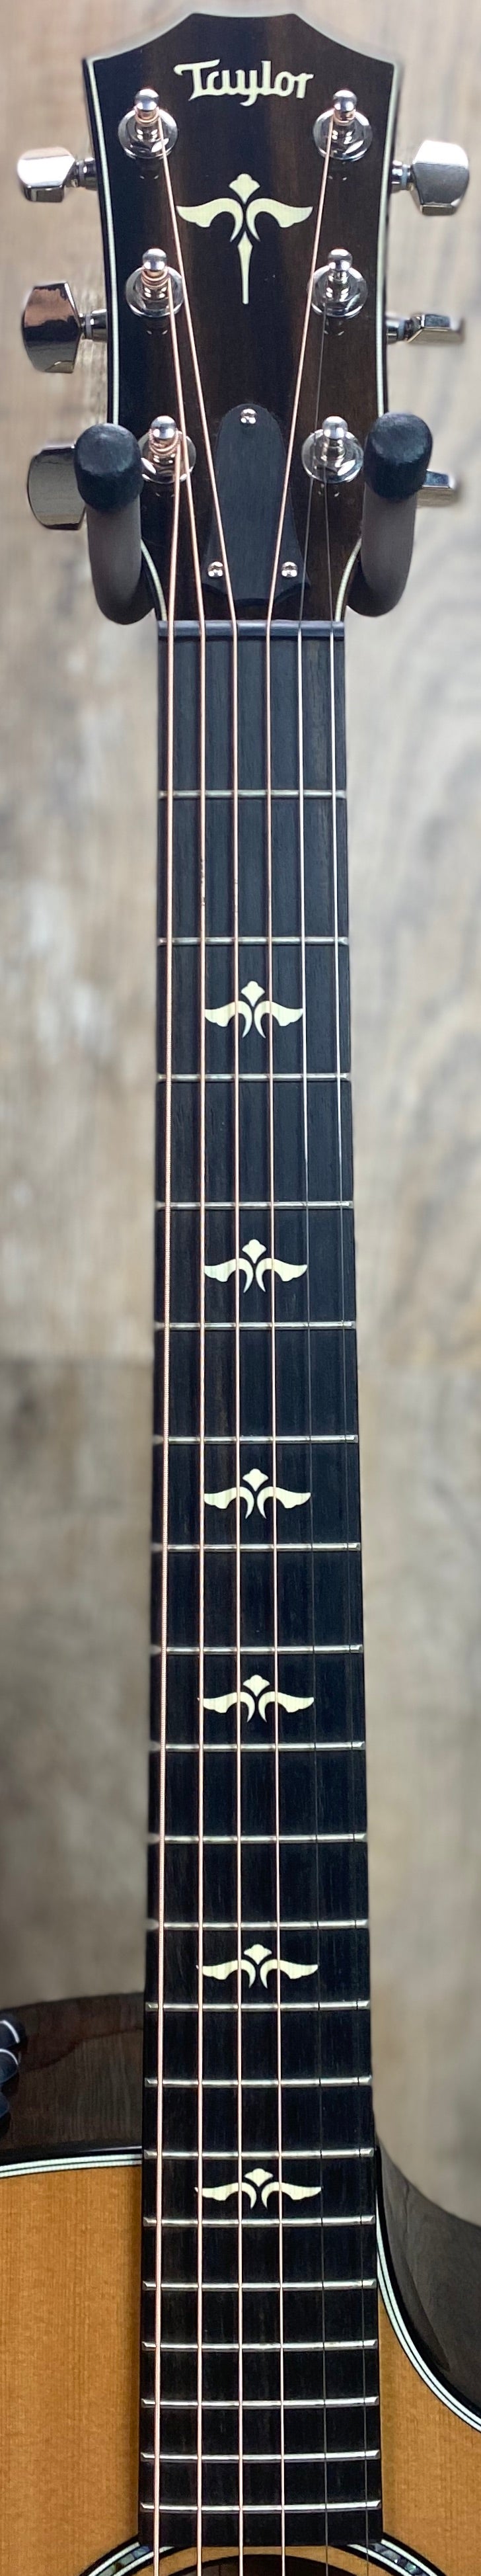 Taylor 614ce Acoustic Guitar fretboard and headstock Tone Shop Guitars Dallas